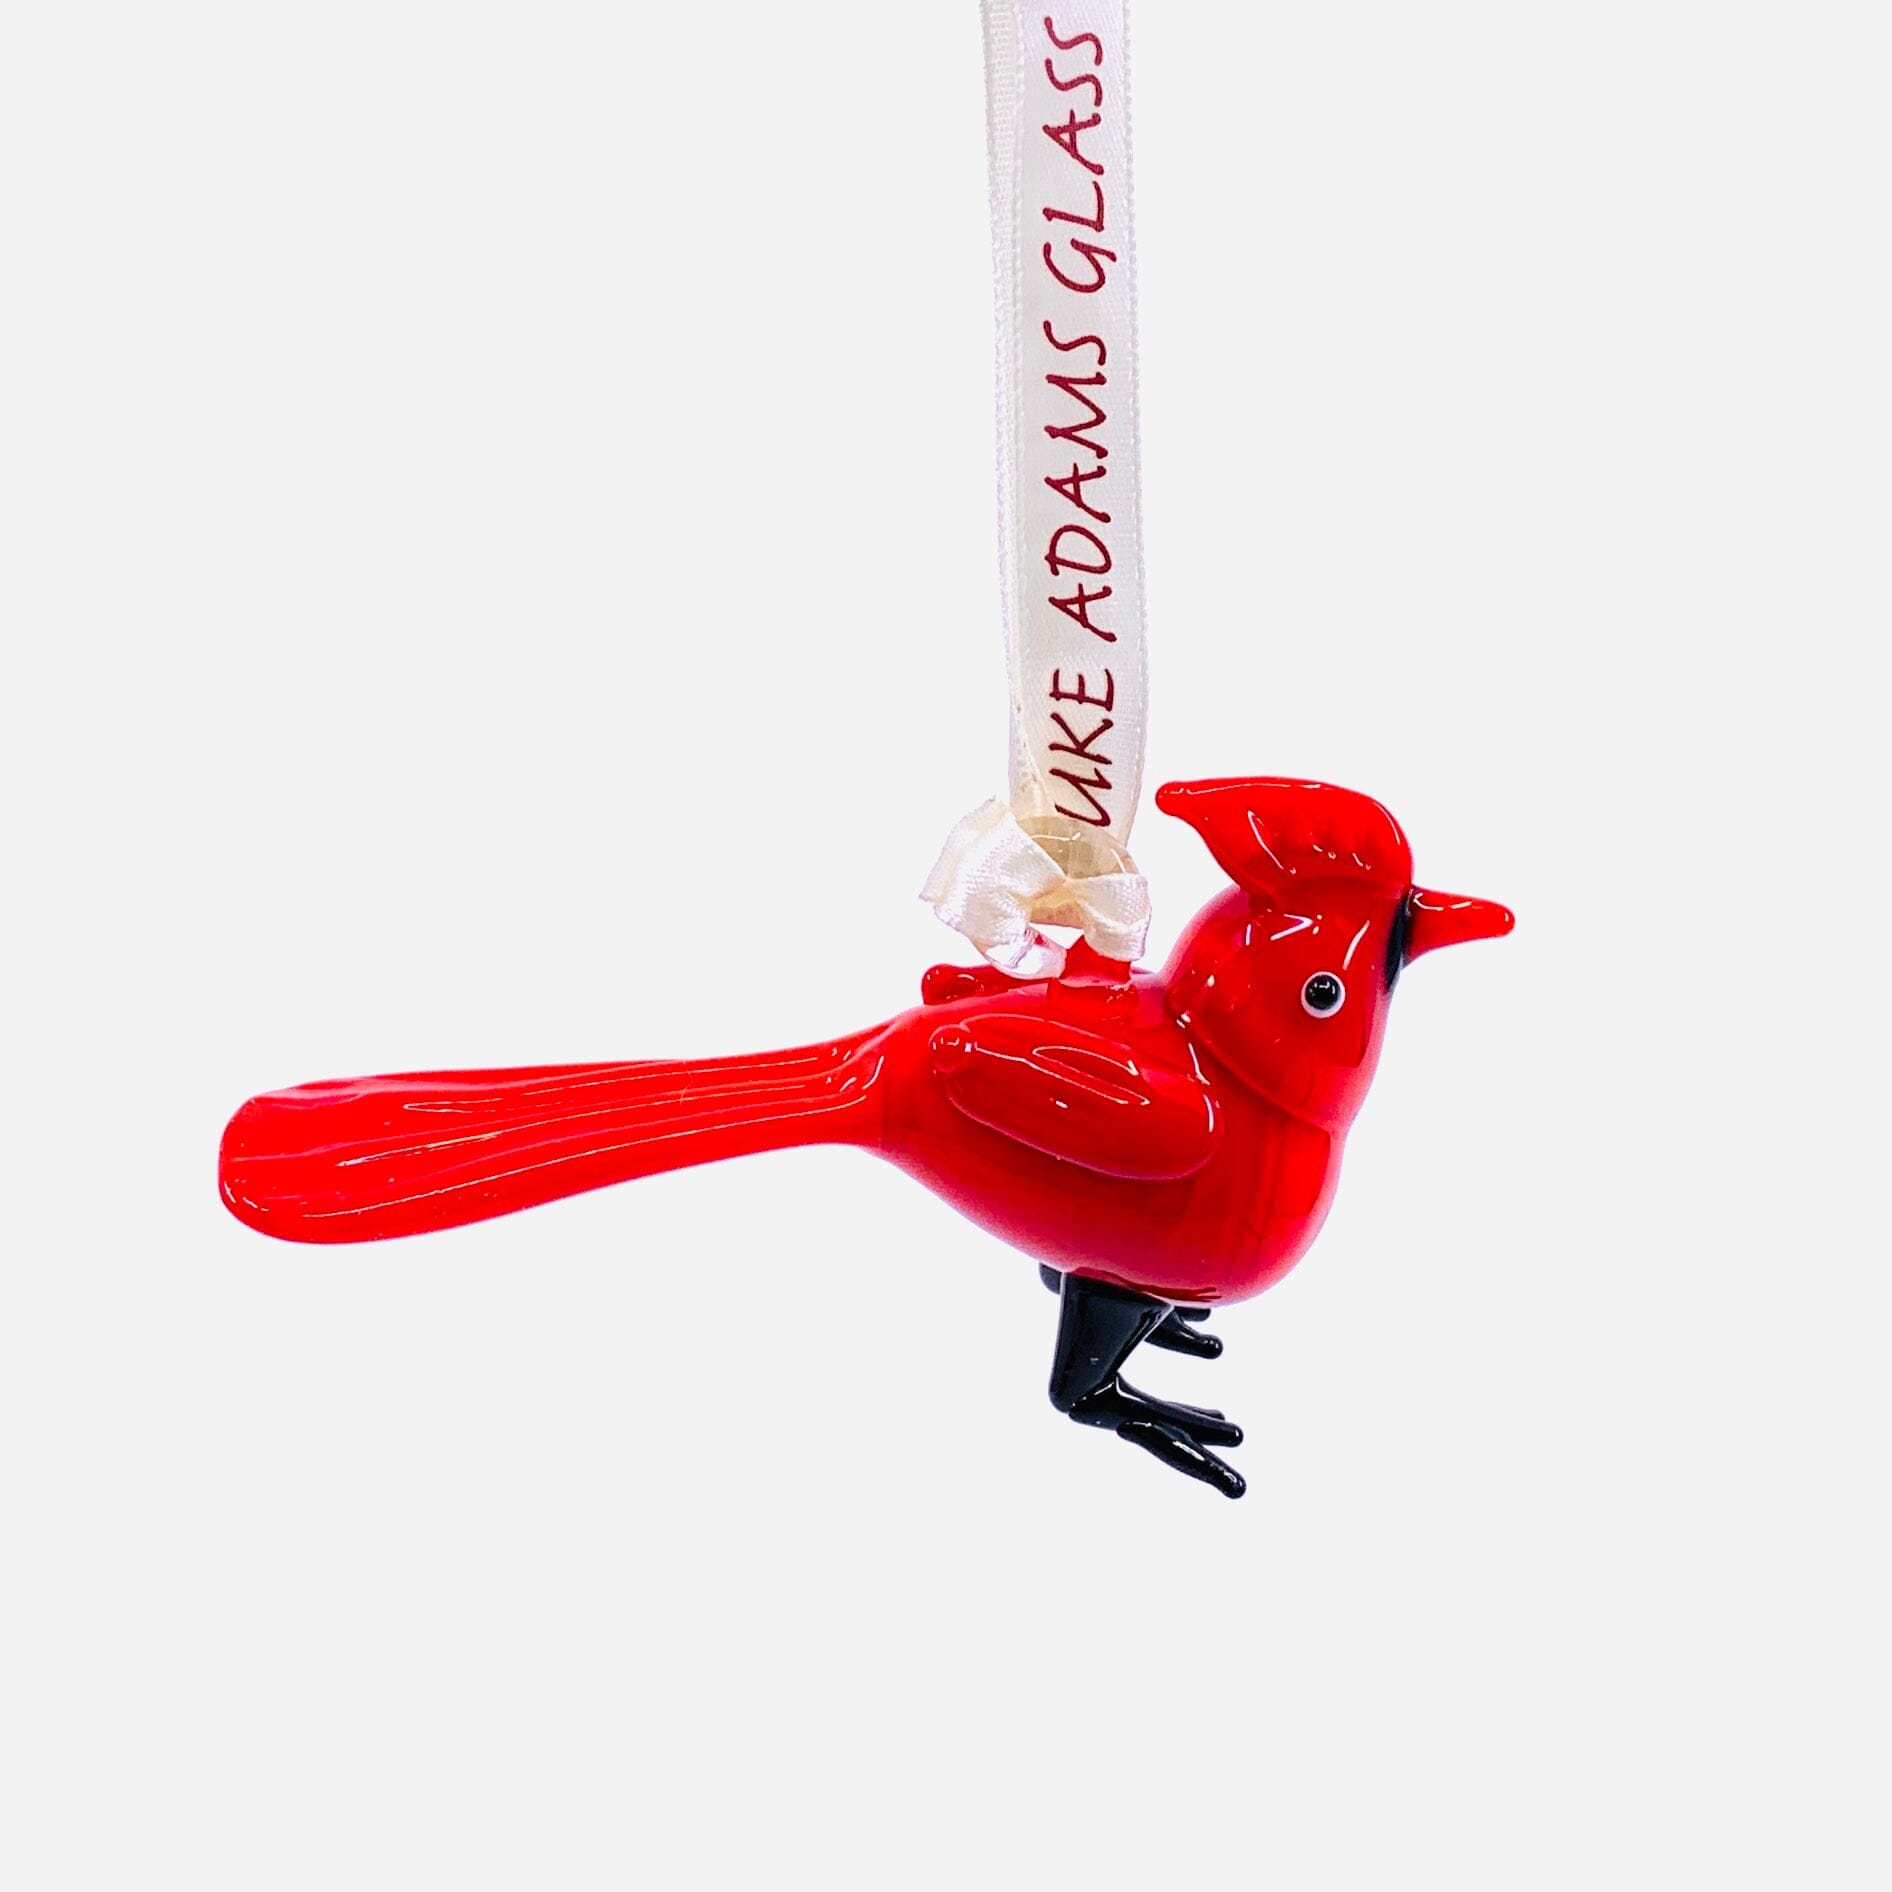 Ribbon Glass Ornament 14, Cardinal Art Studio 